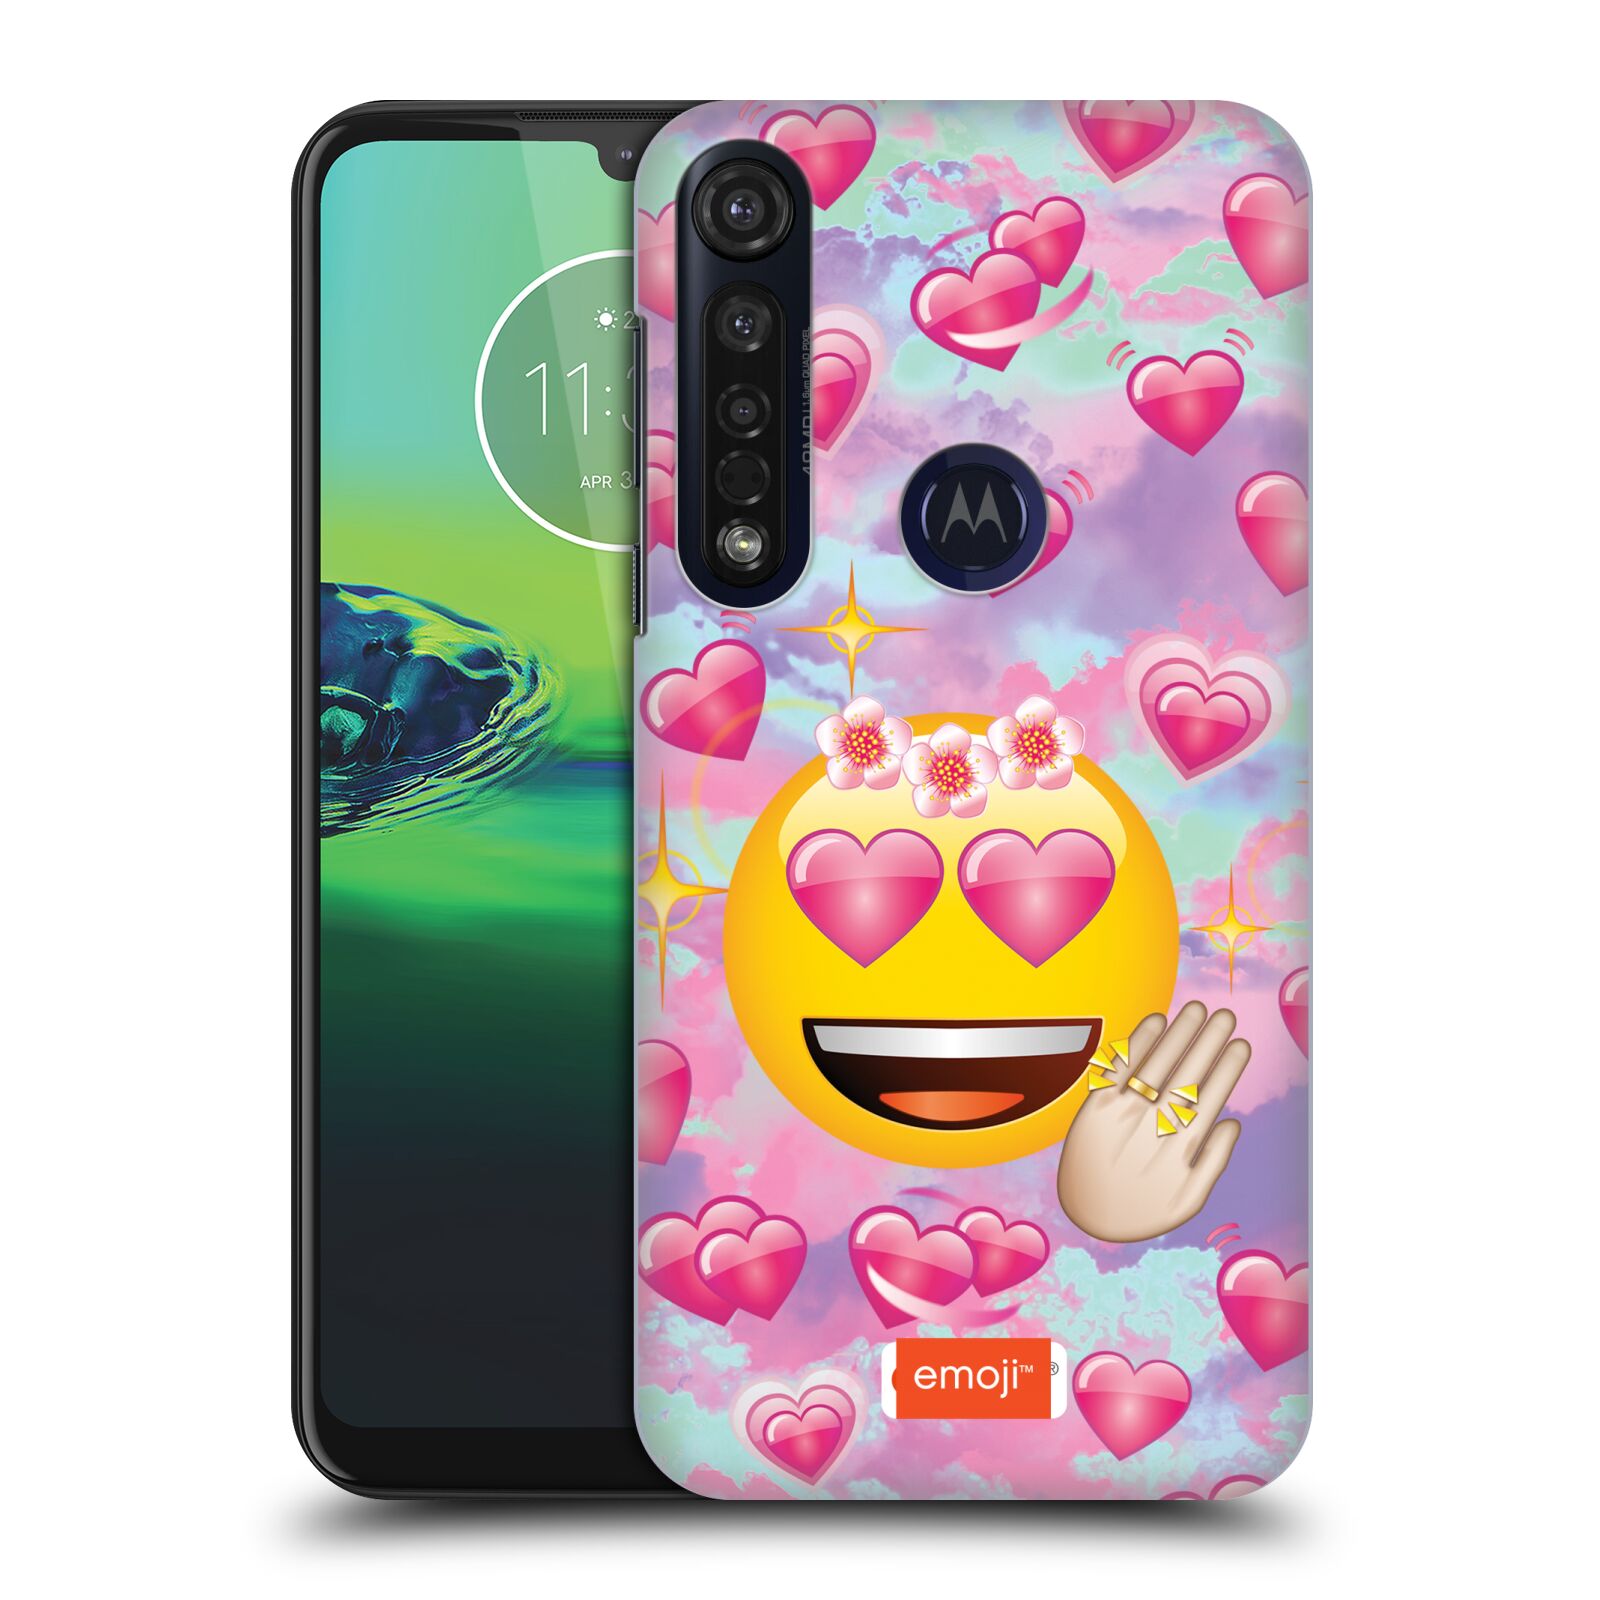 Pouzdro na mobil Motorola Moto G8 PLUS - HEAD CASE - smajlík oficiální kryt EMOJI velký smajlík růžová srdíčka